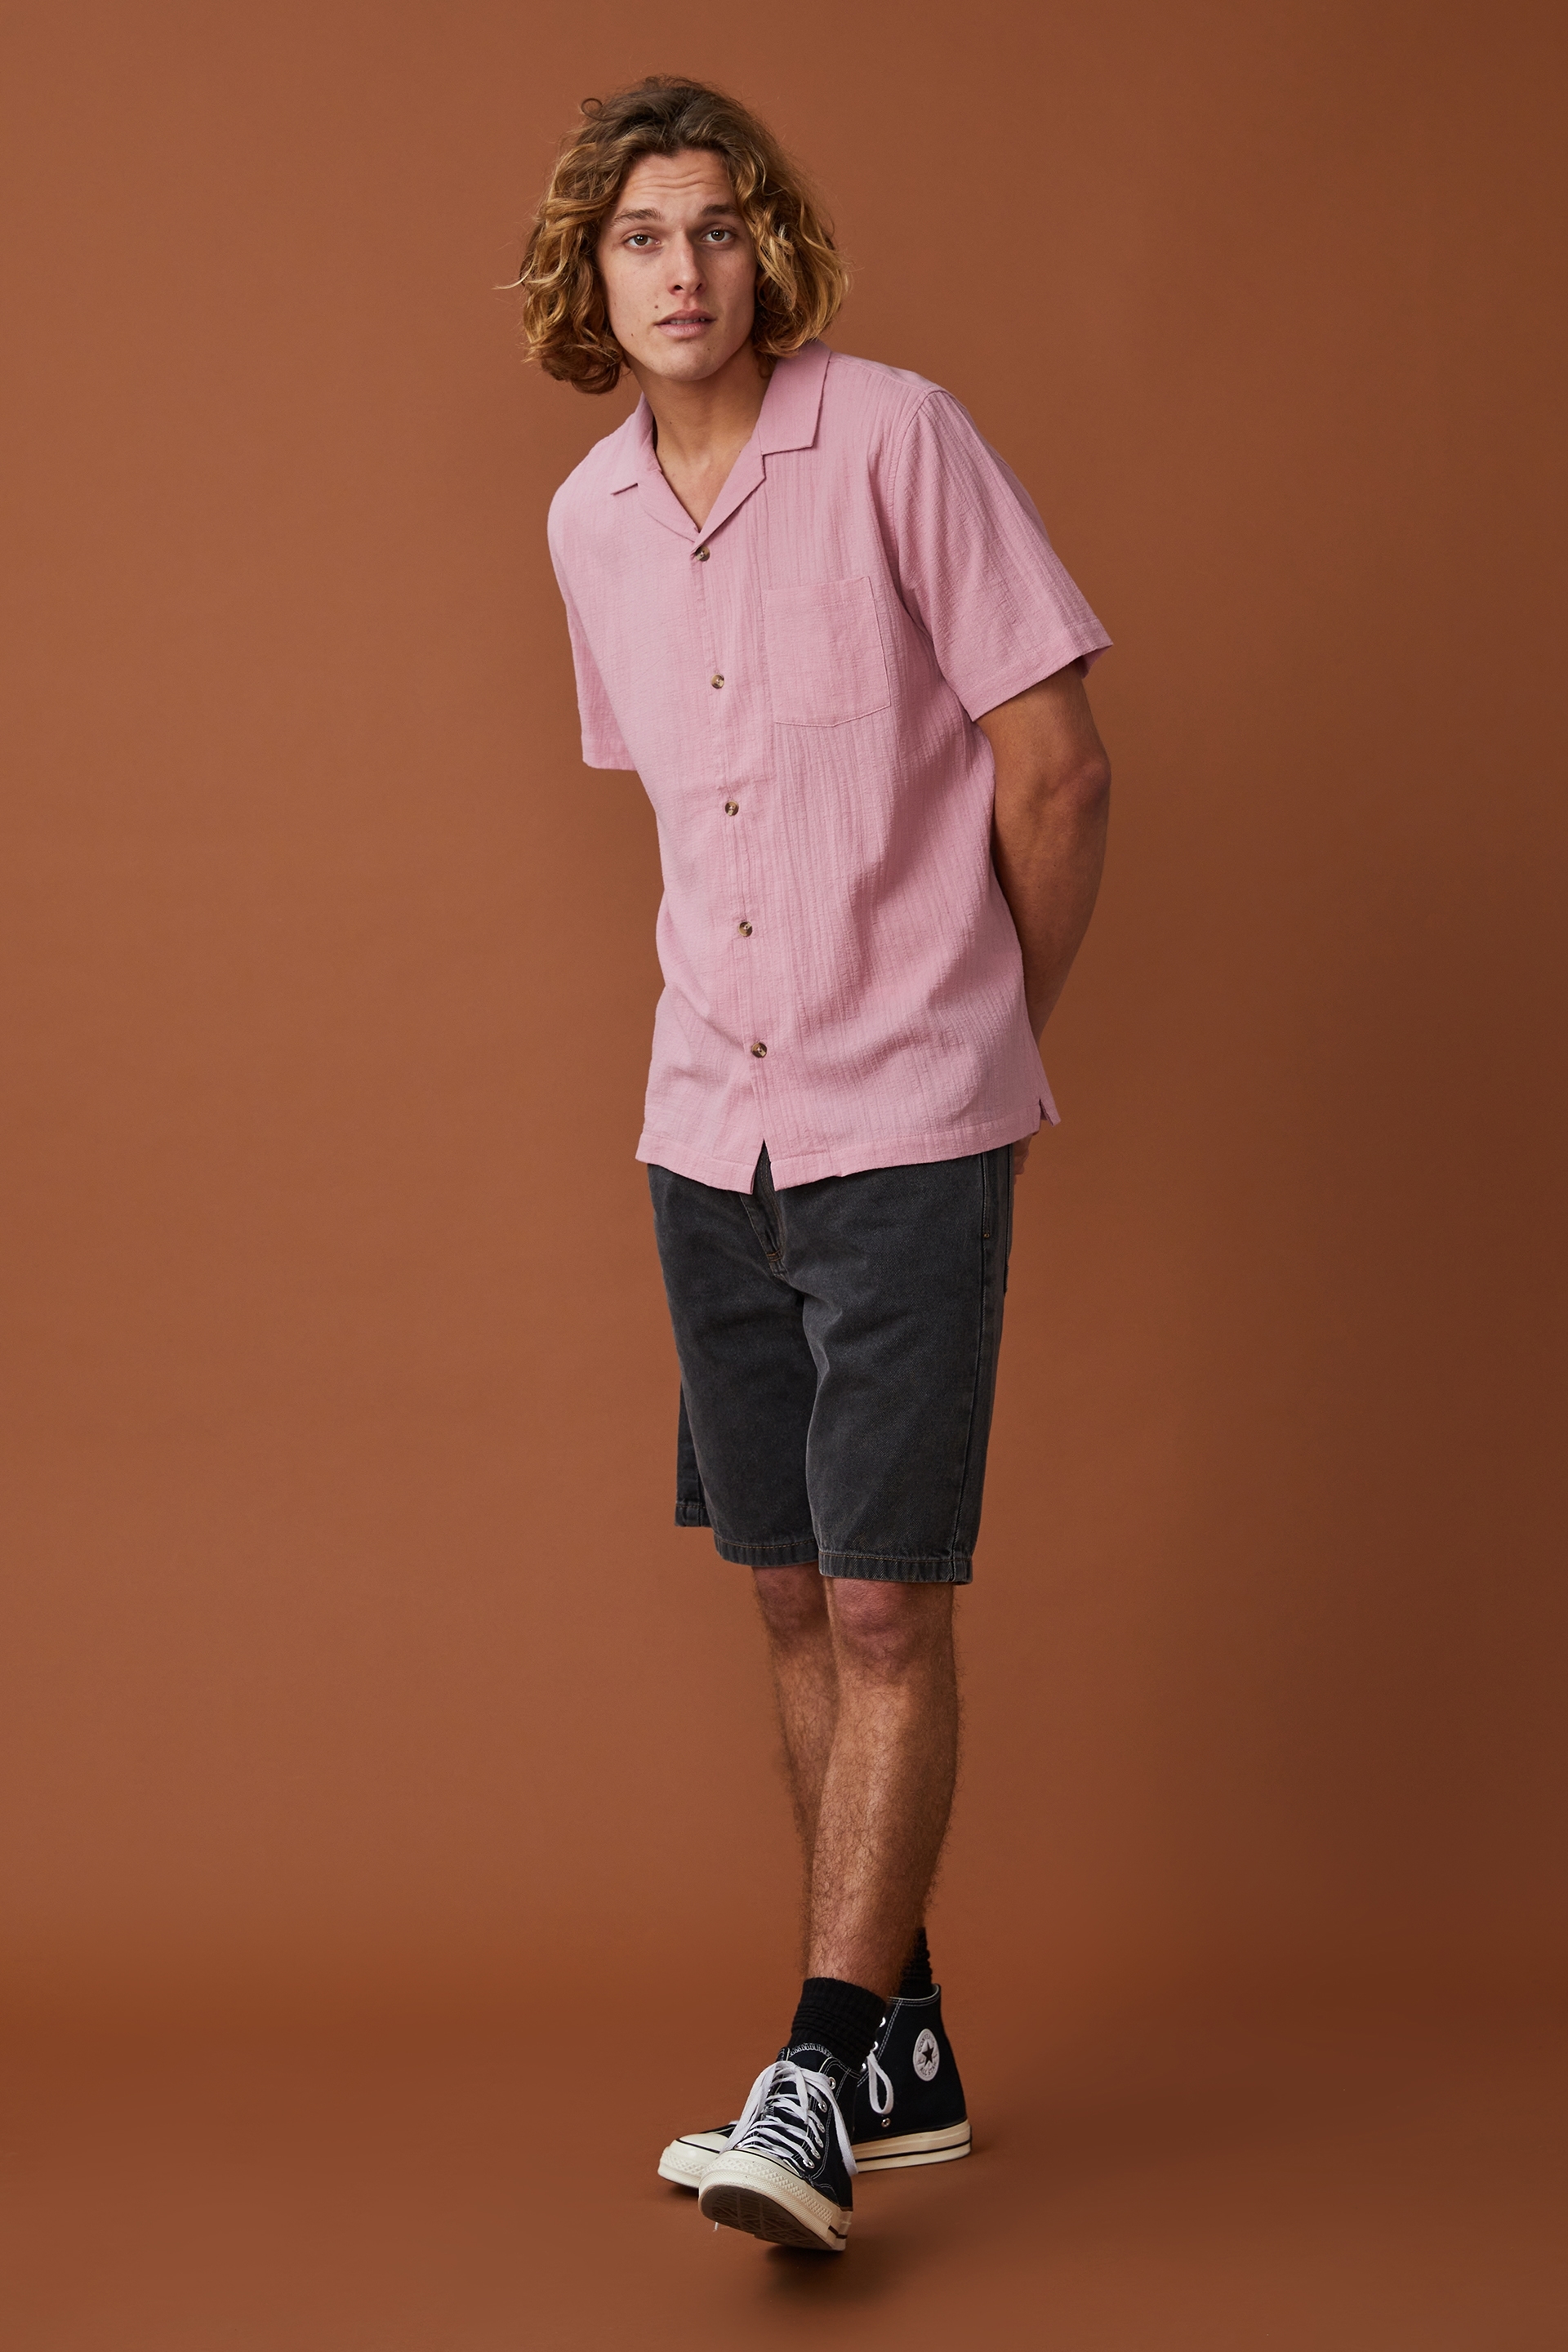 Cotton On Men - Riviera Short Sleeve Shirt - Chalk pink